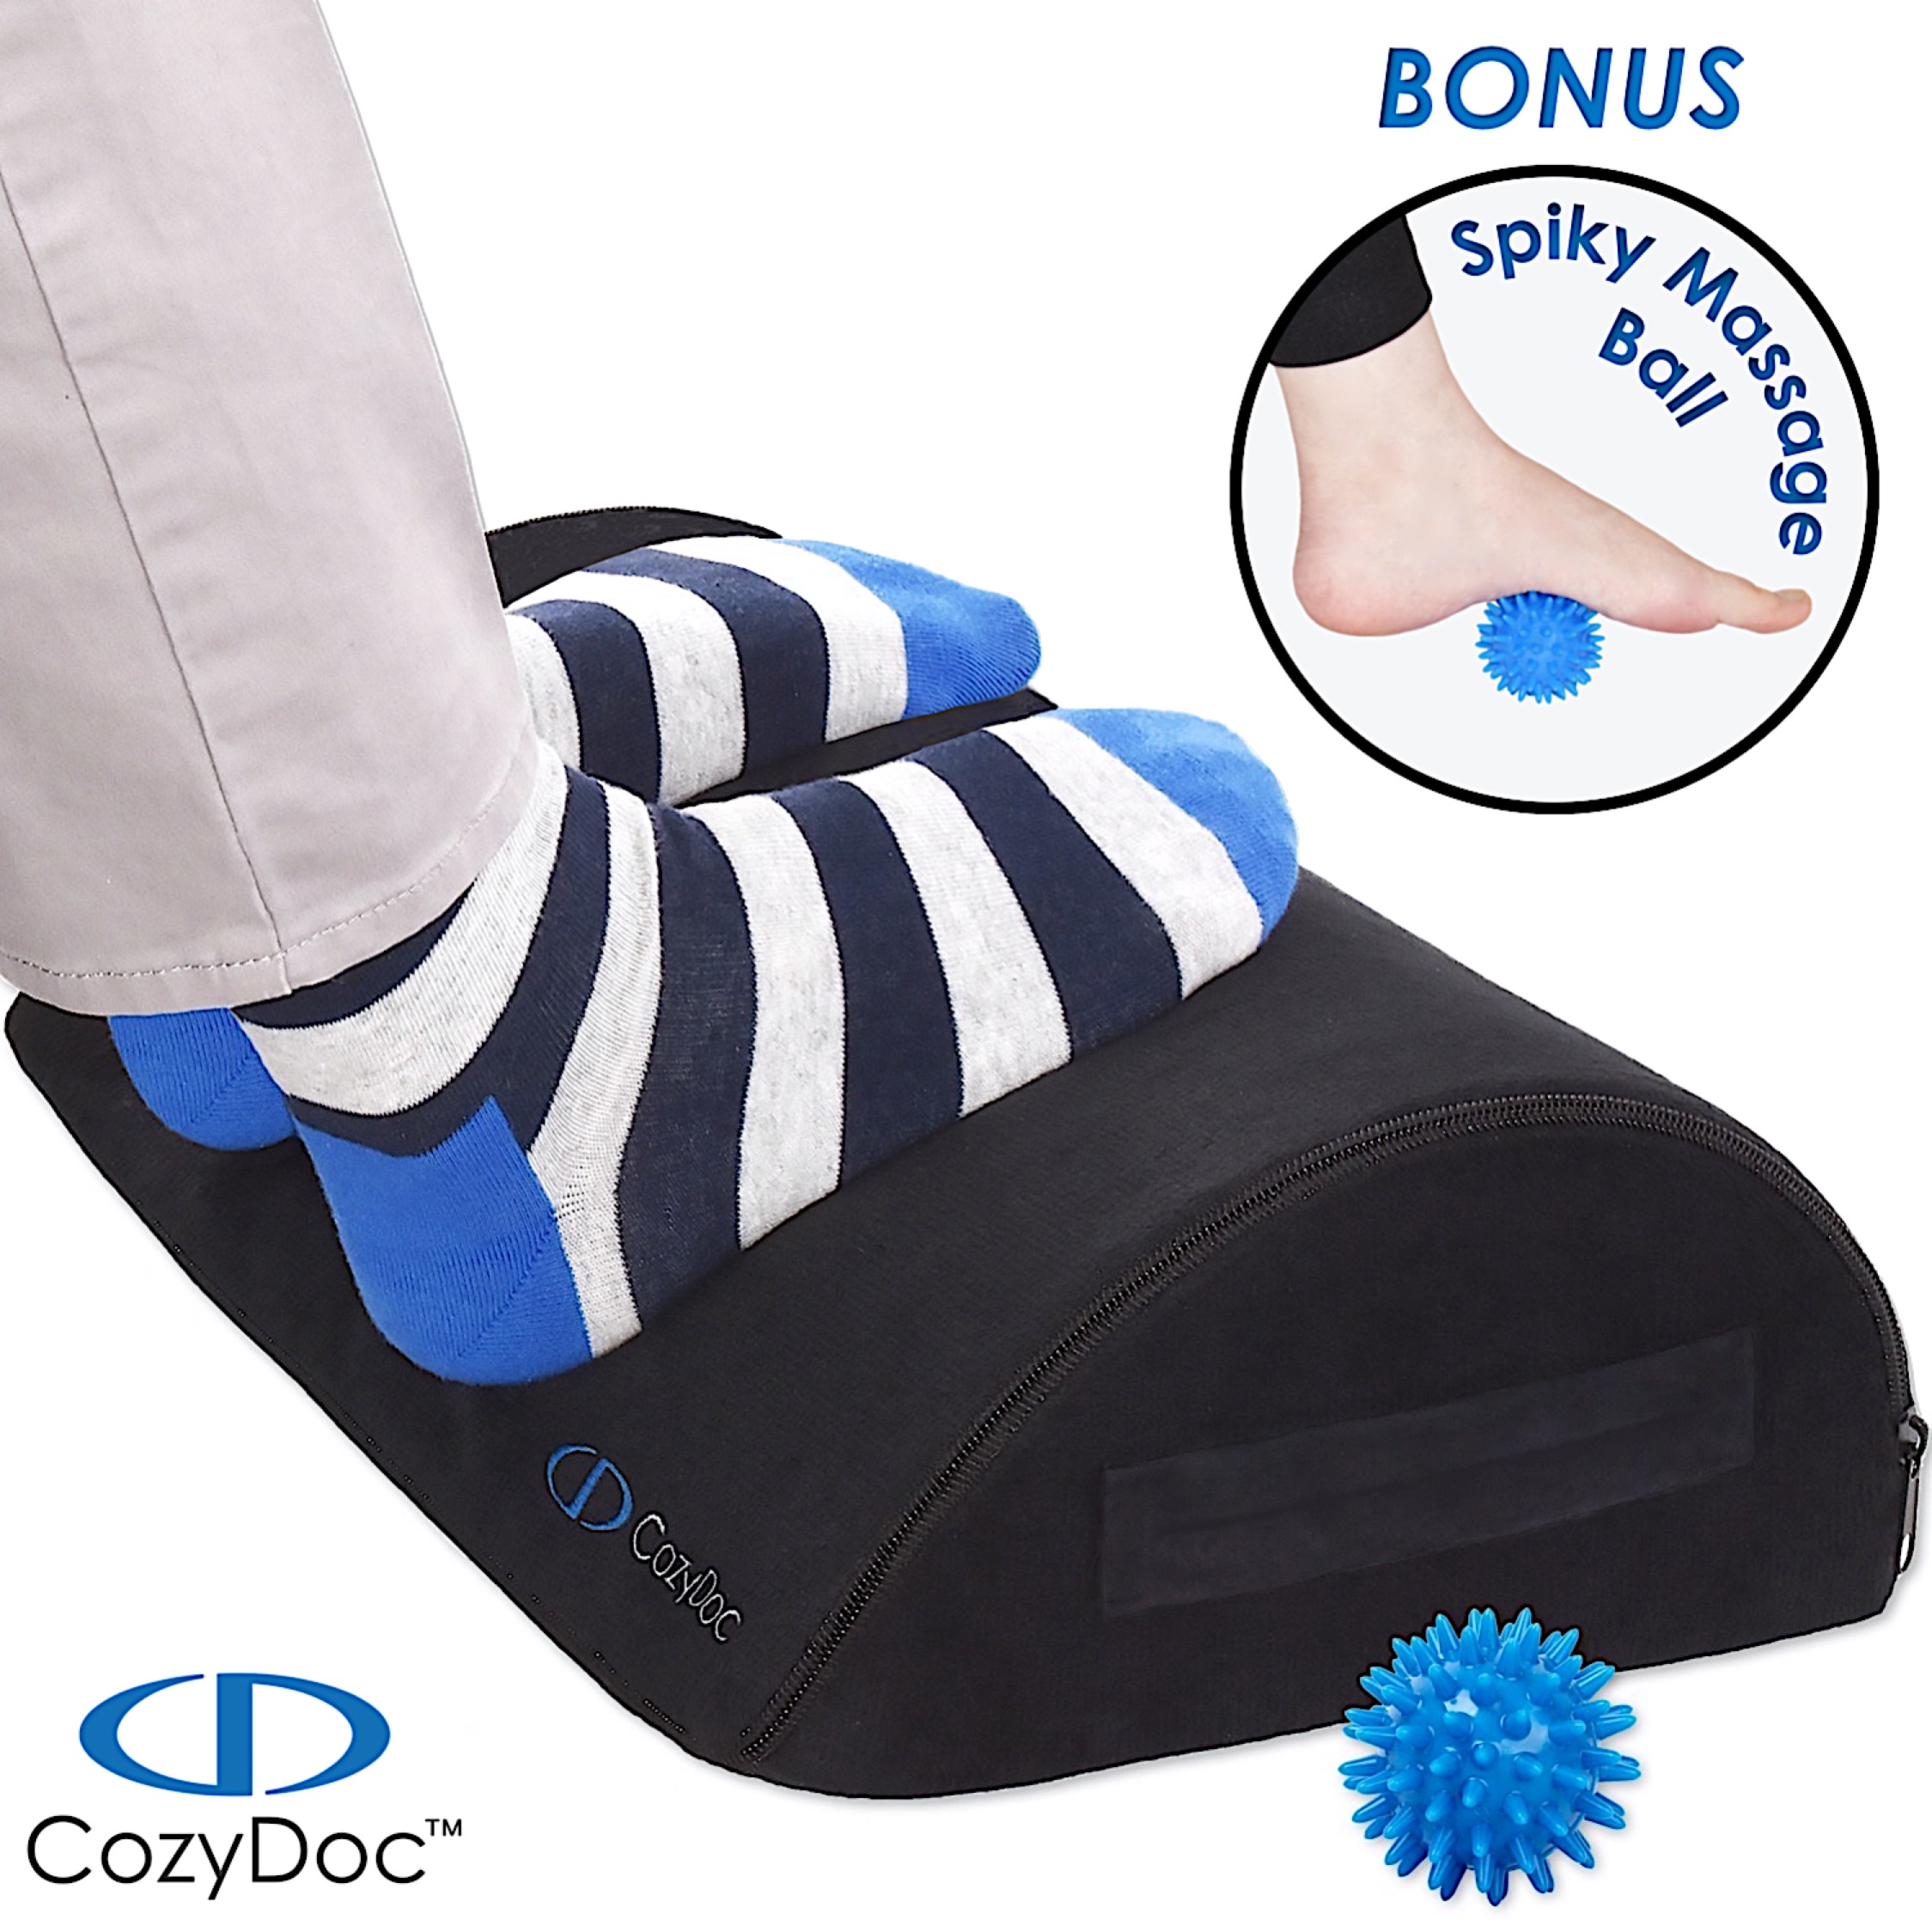 CozyDoc Ergonomic Foot Rest